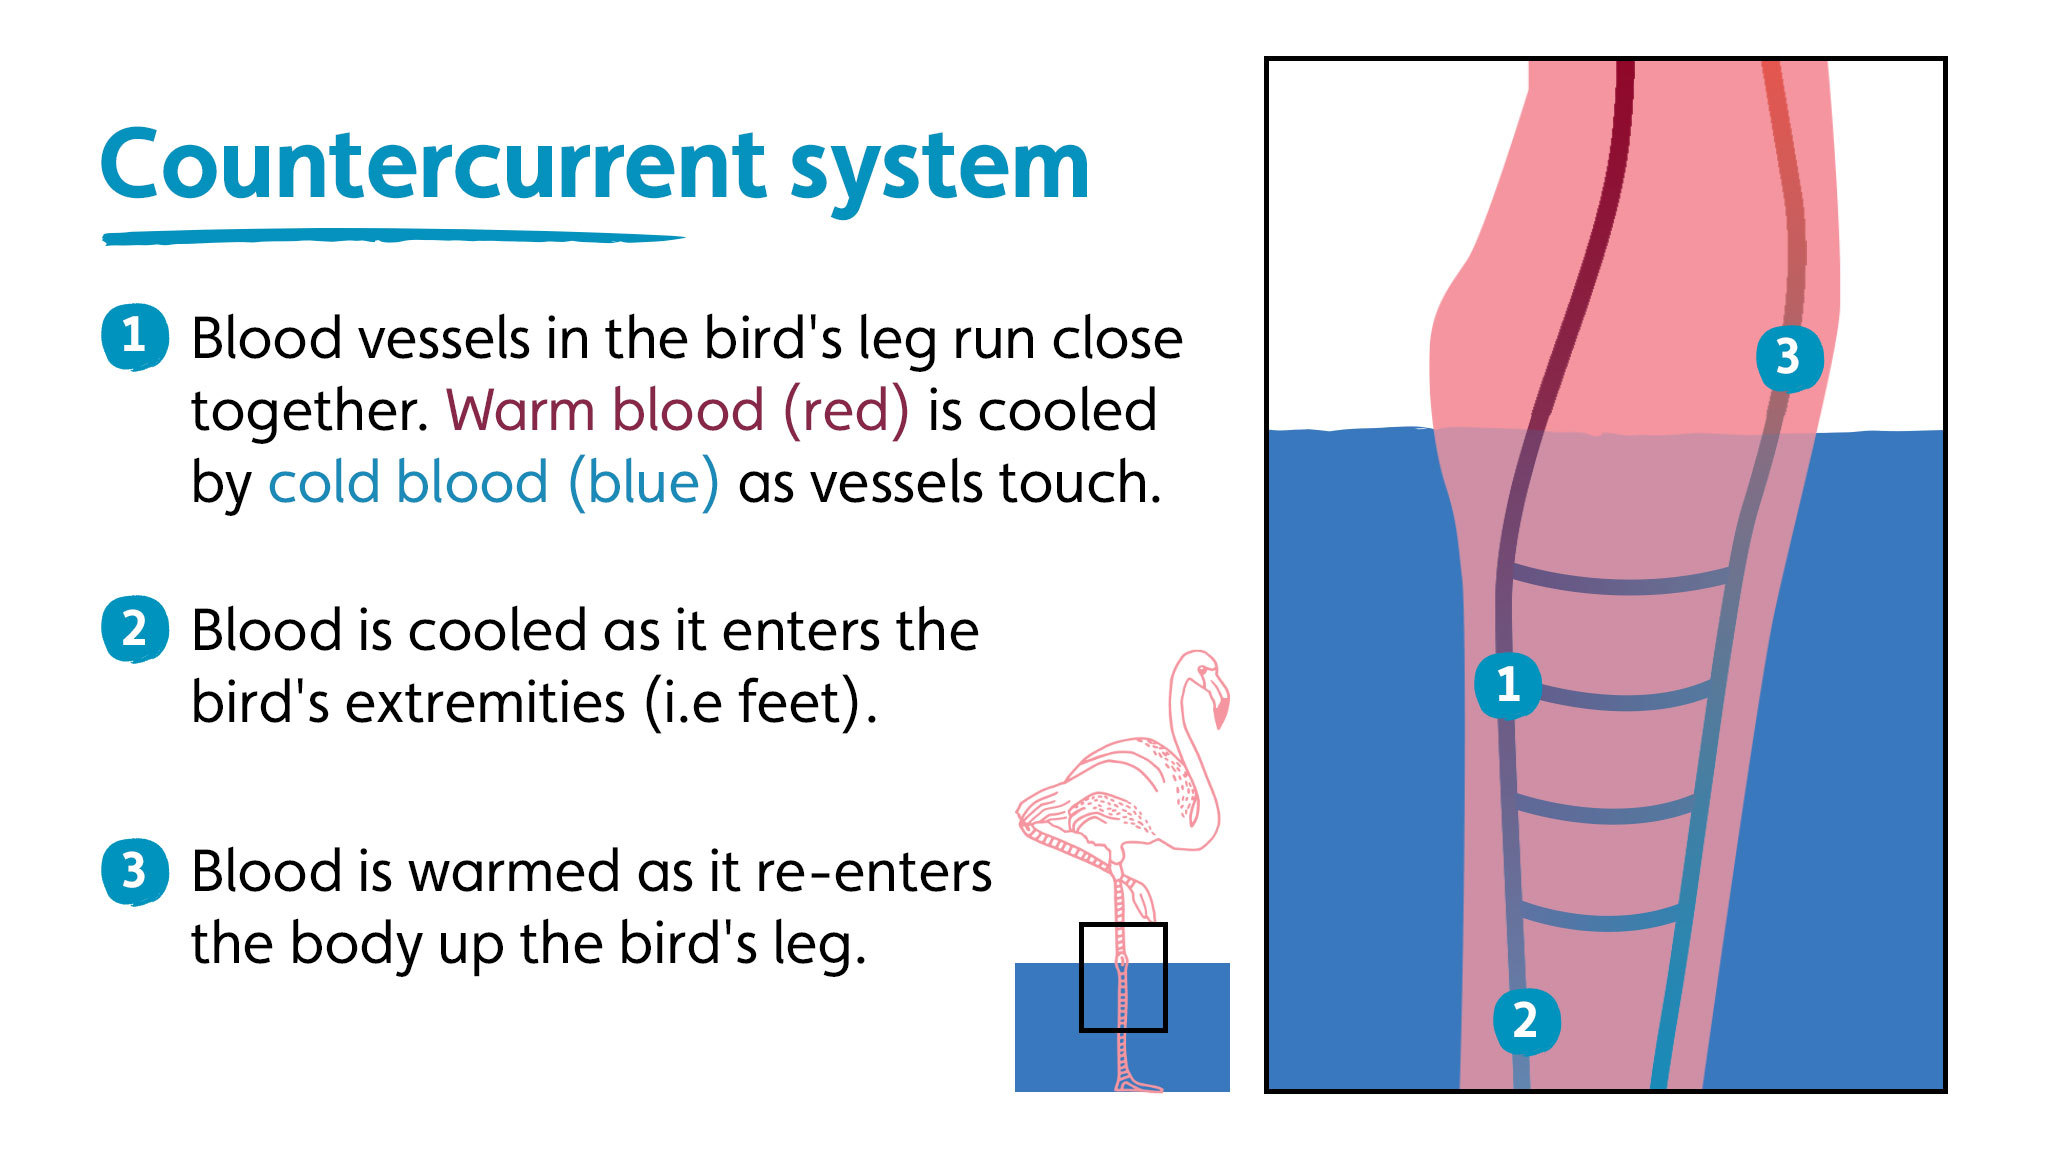 Counter-current heat exchange system in birds legs